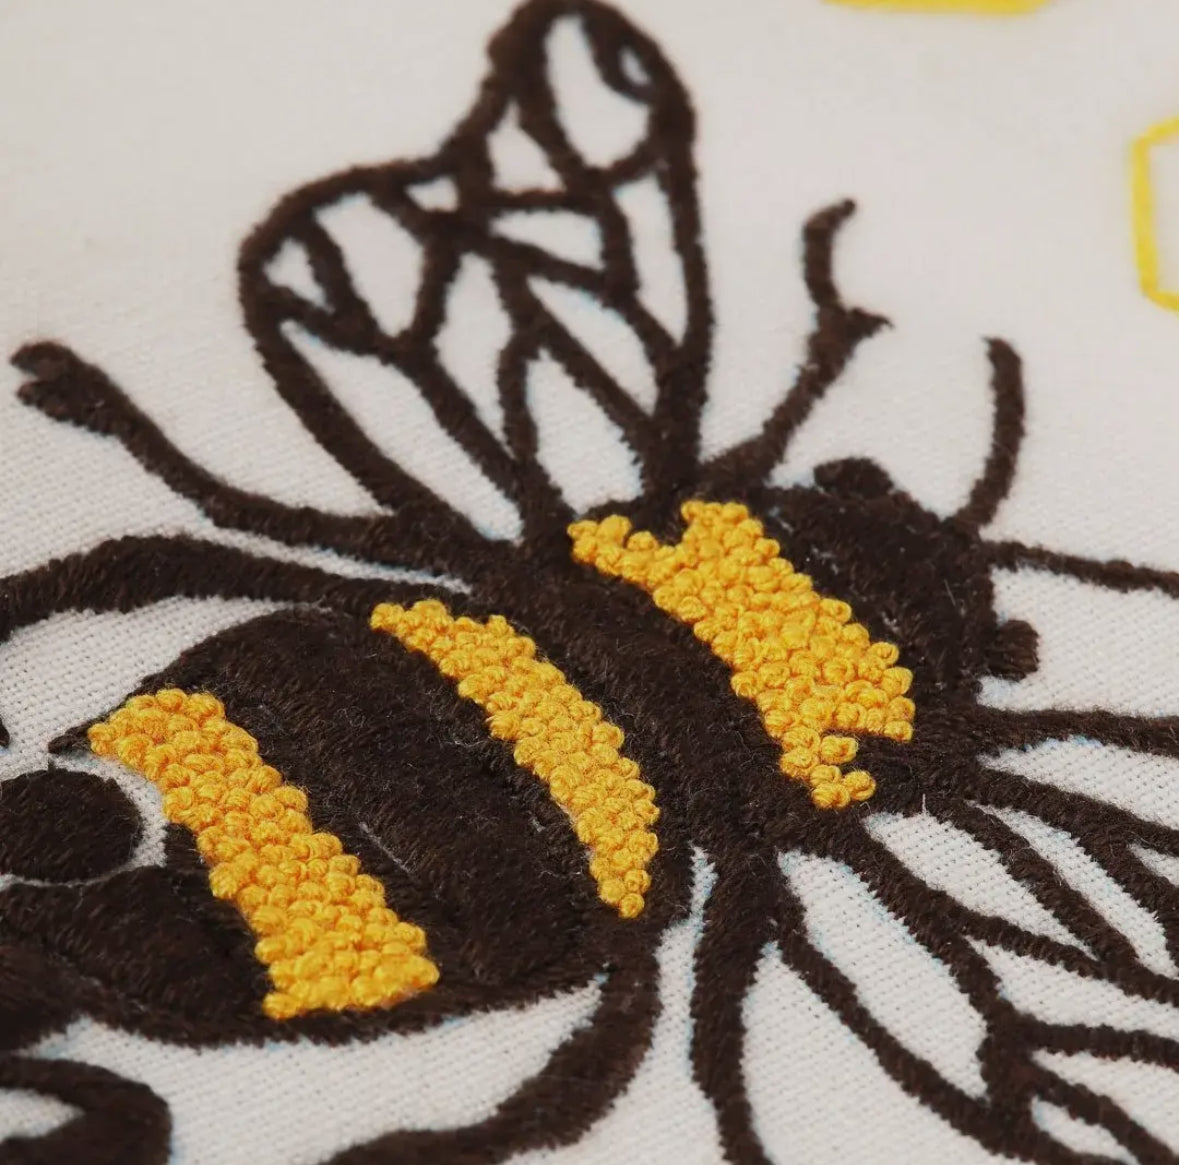 Bee Kind - Embroidery Kit